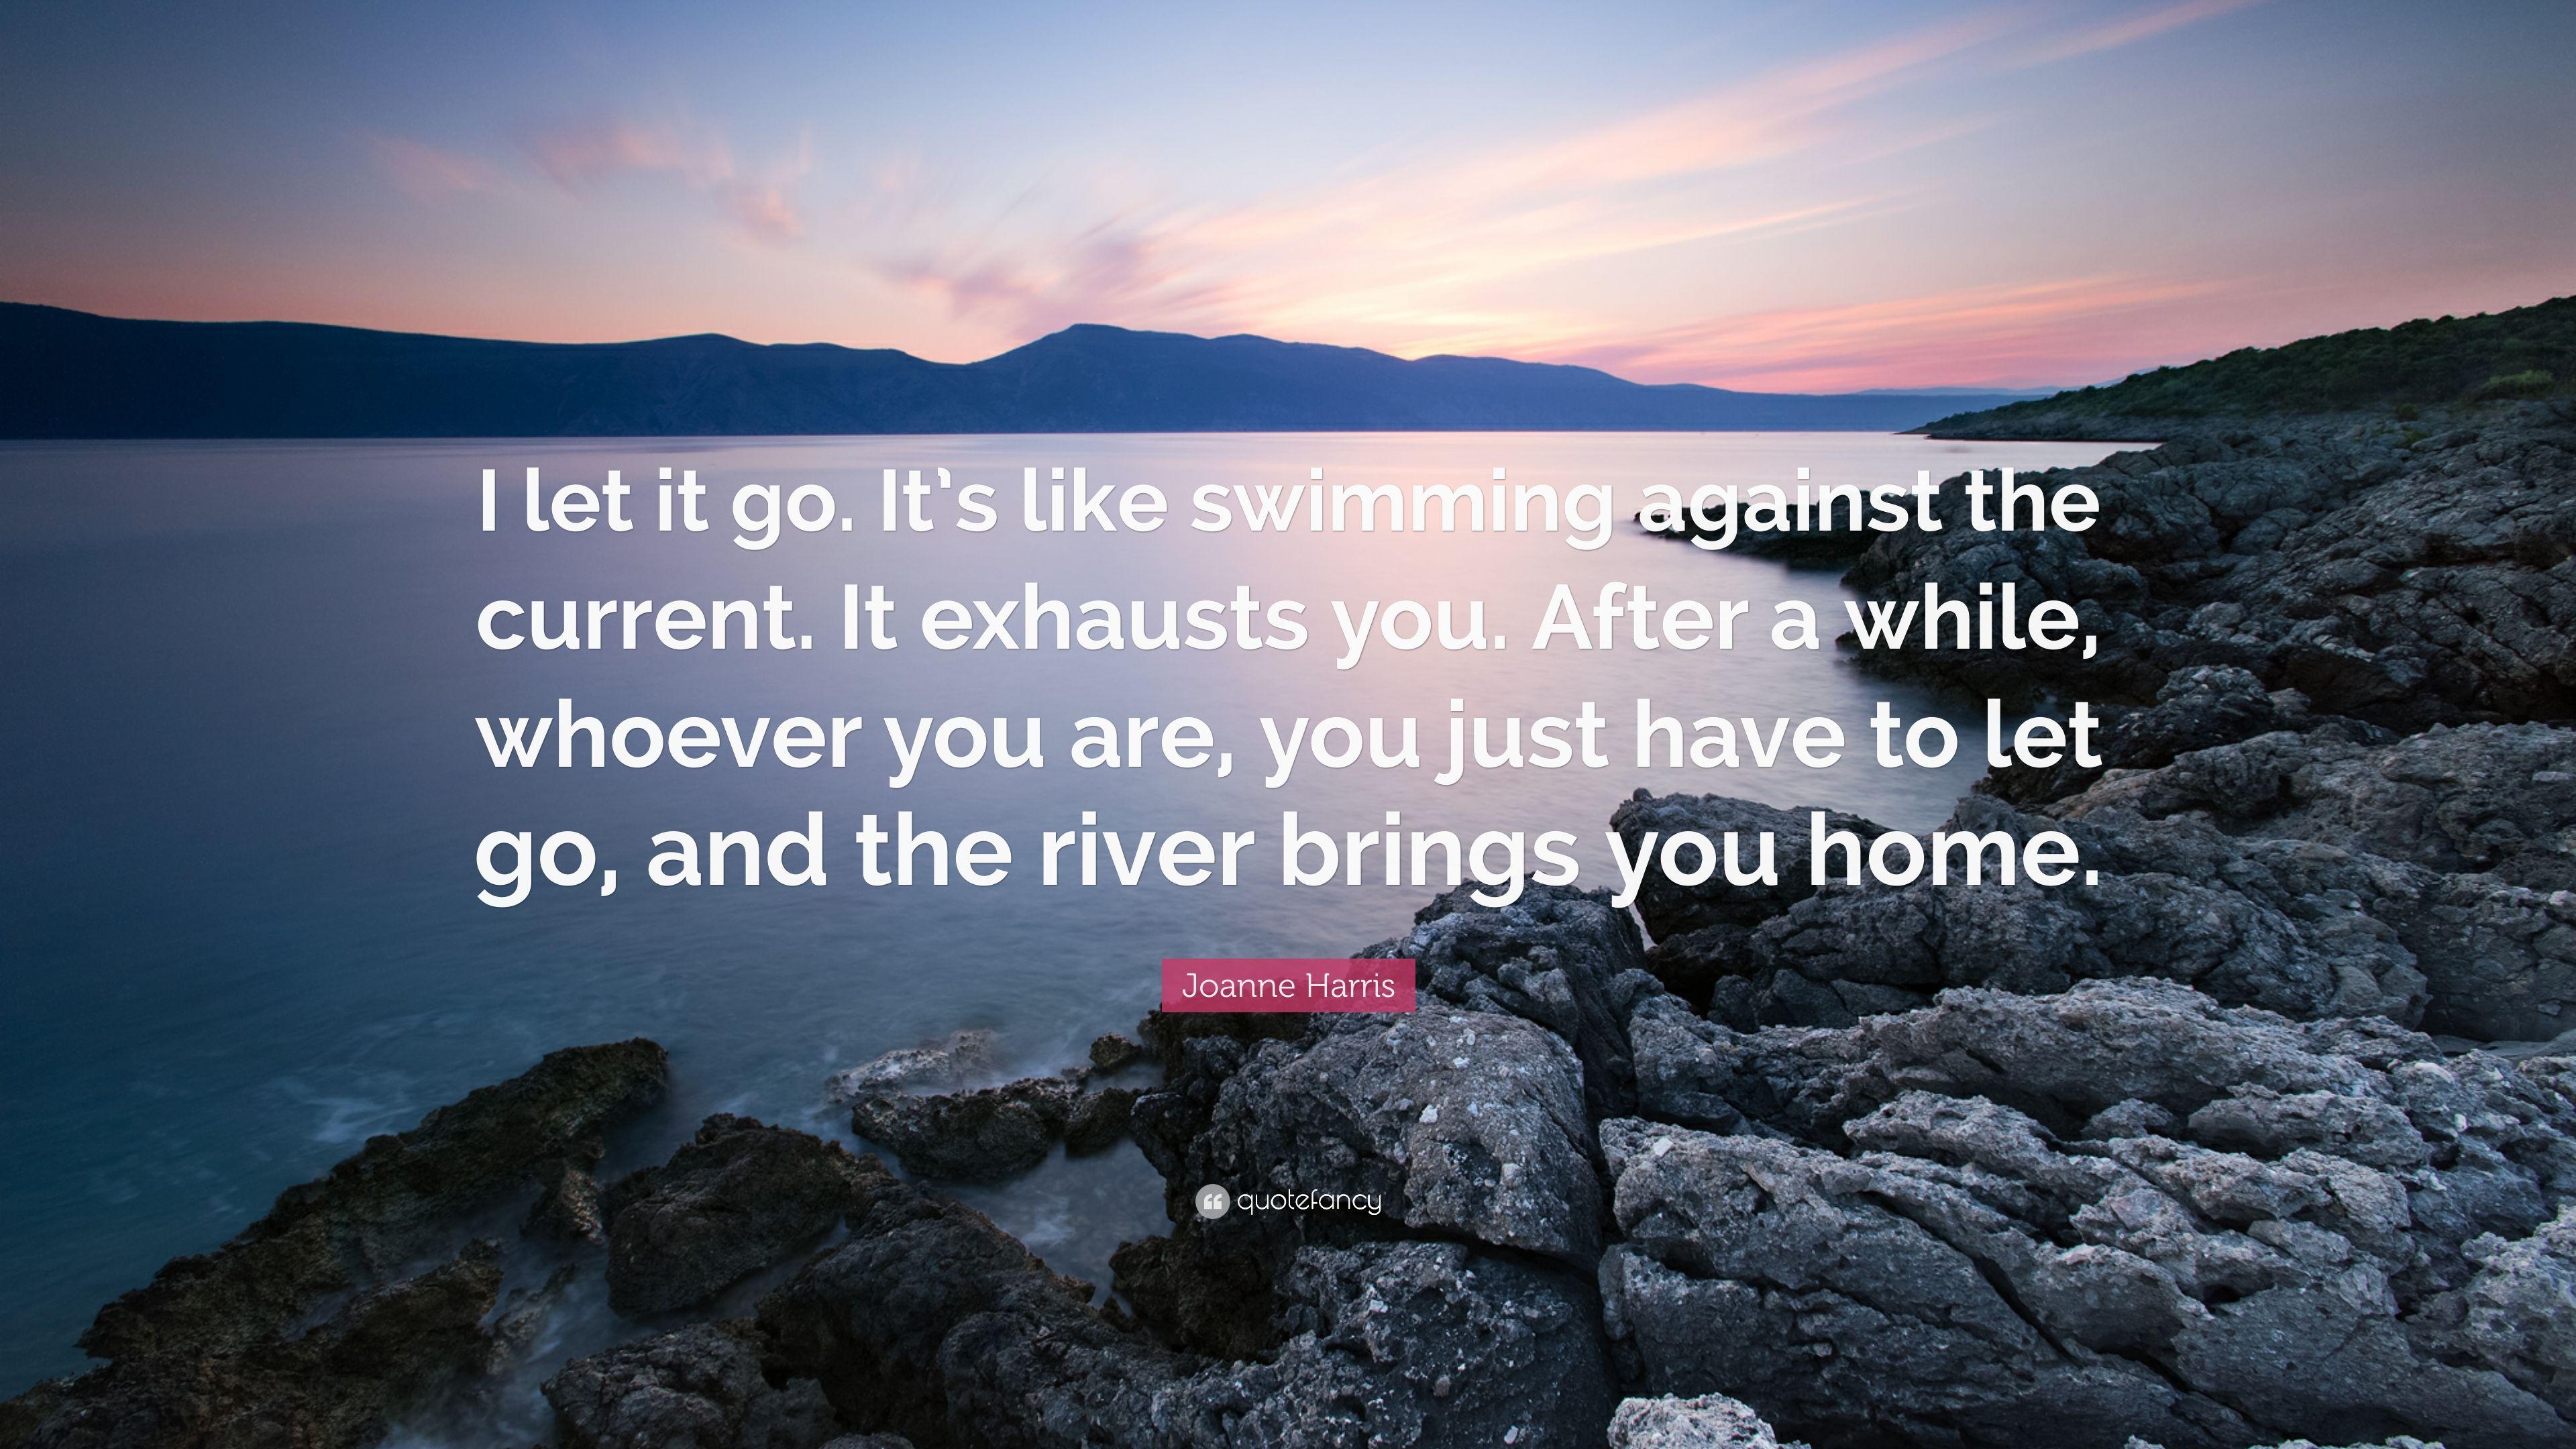 Joanne Harris Quote: “I let it go. It's like swimming